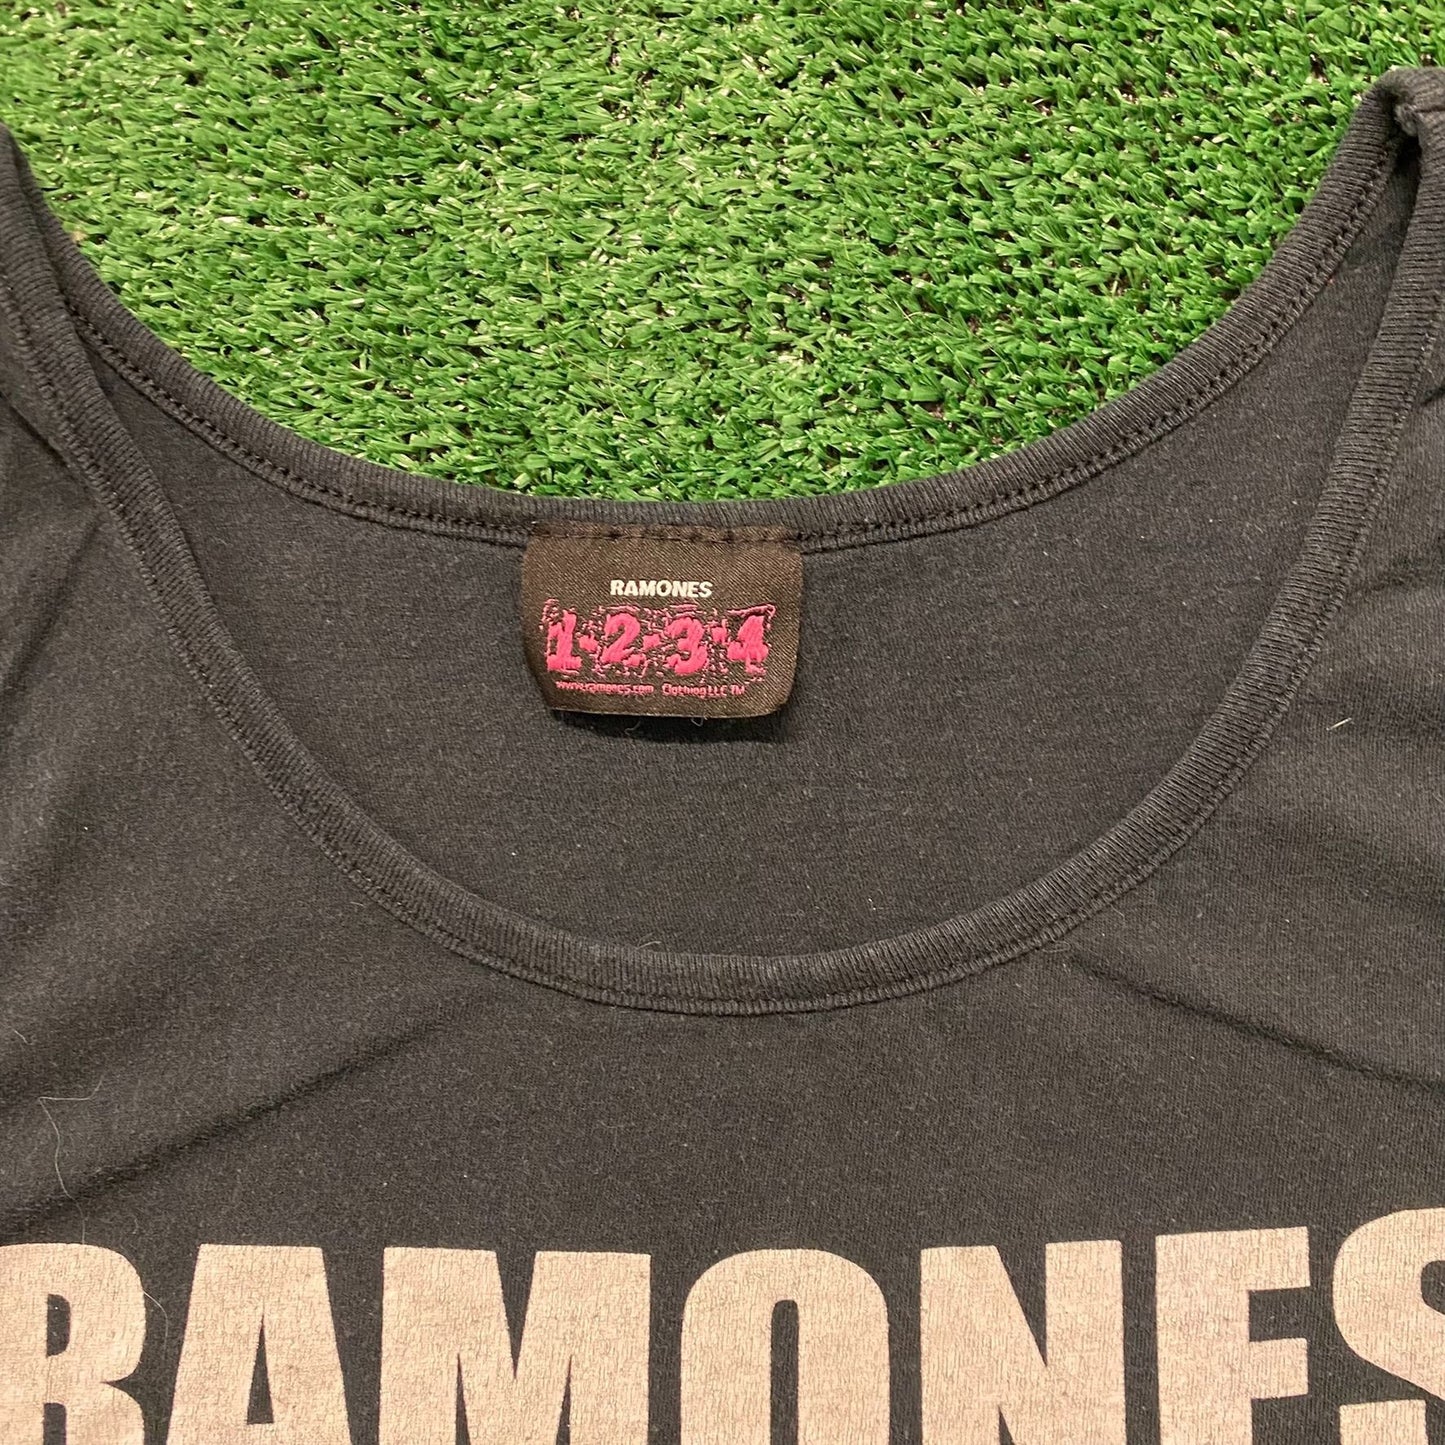 Ramones Vintage Punk Rock Band T-Shirt